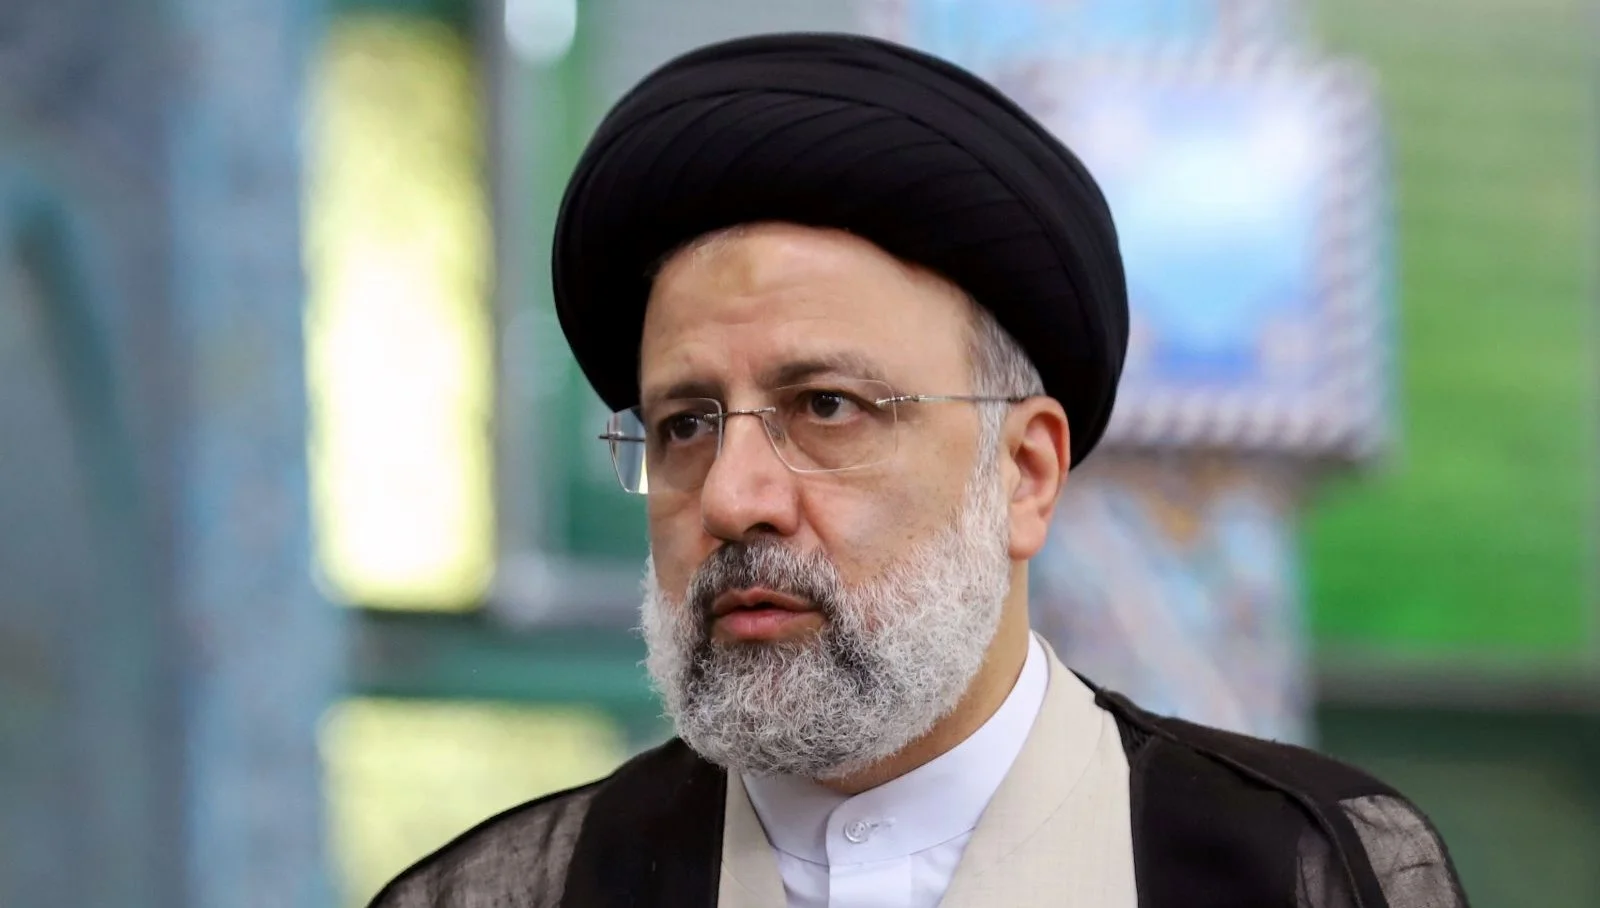 İran Cumhurbaşkanı’ndan “başörtüsü” açıklaması